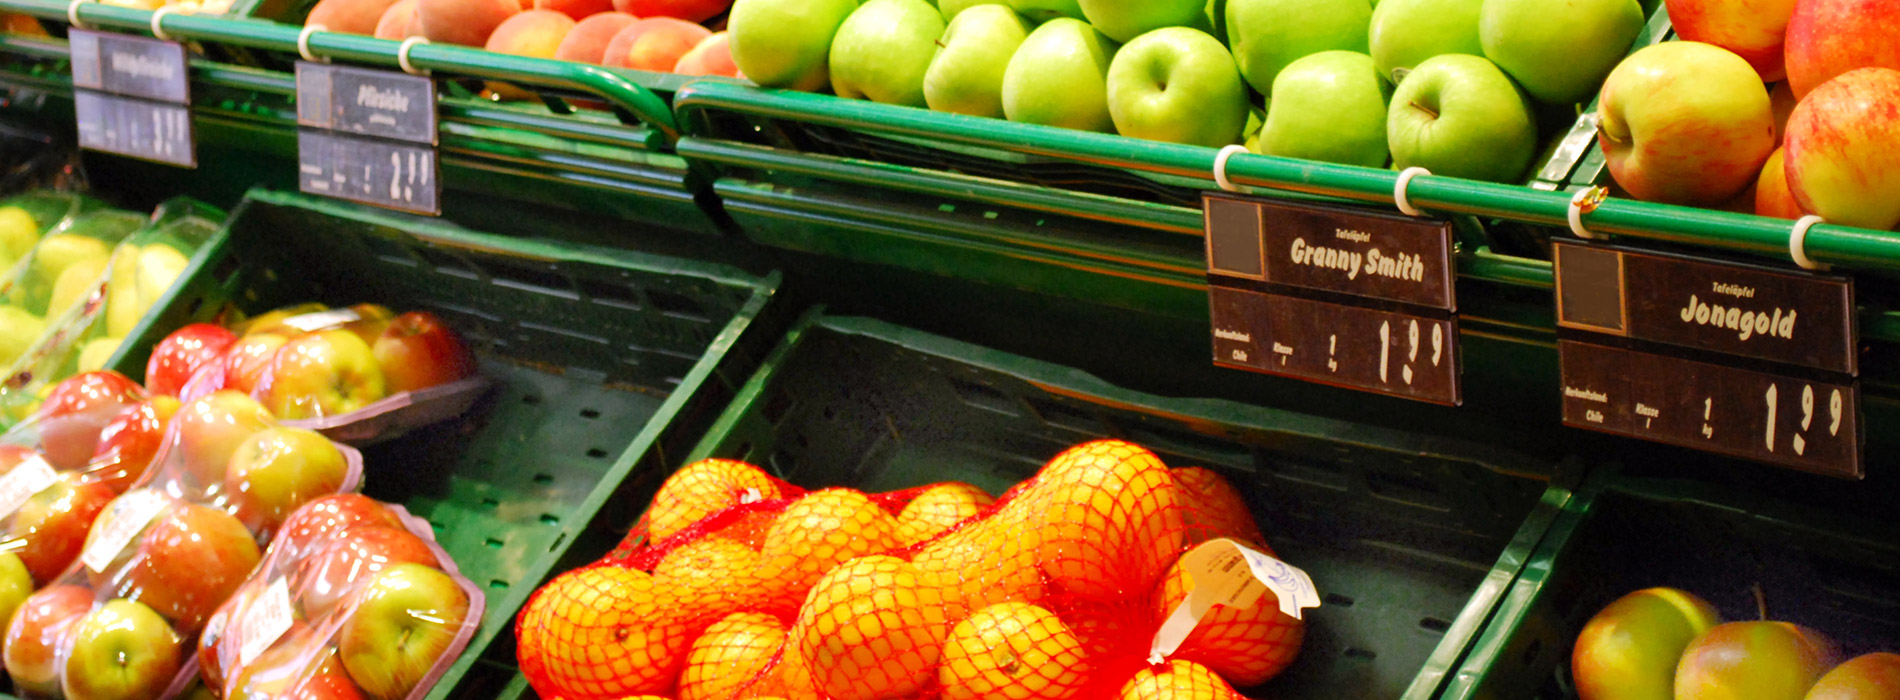 label-markets-food-beverage-labels-produce-fruits-grocery-store-apples-dls